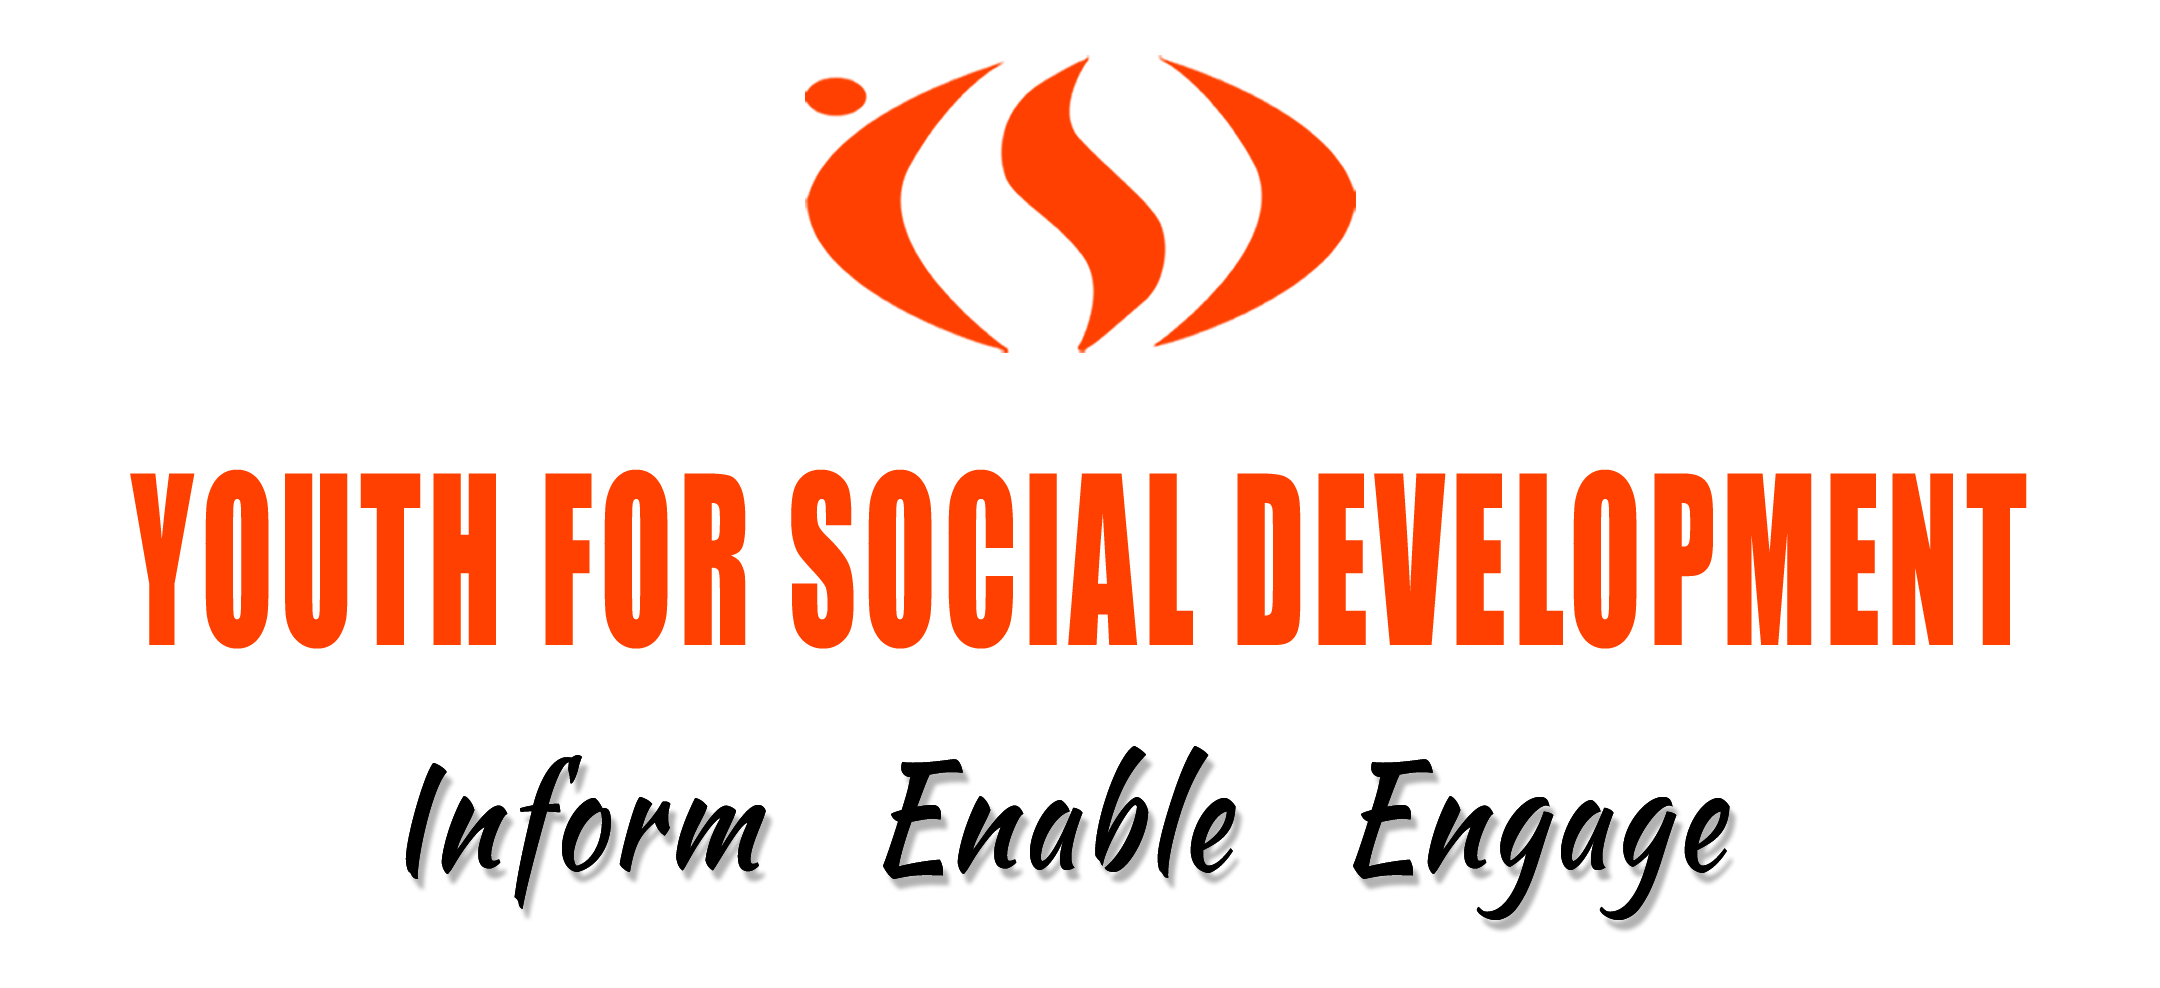 Youth for Social Development Logo